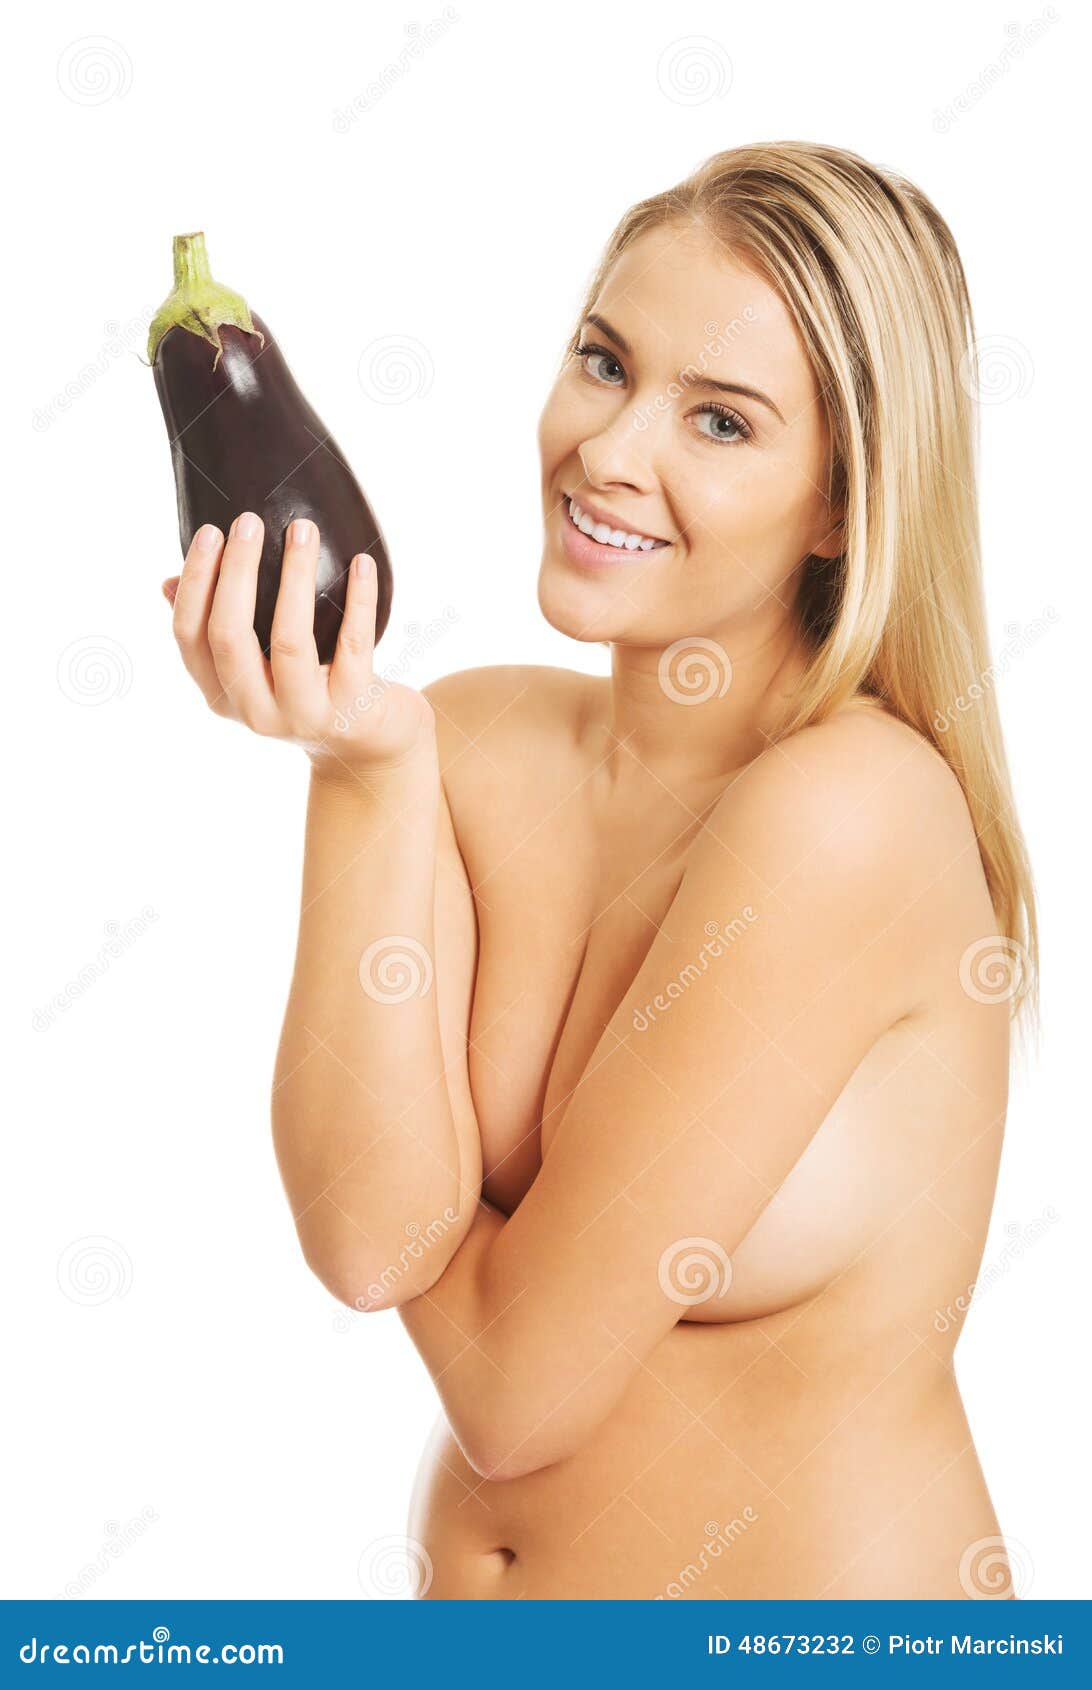 naked girl on cocacola